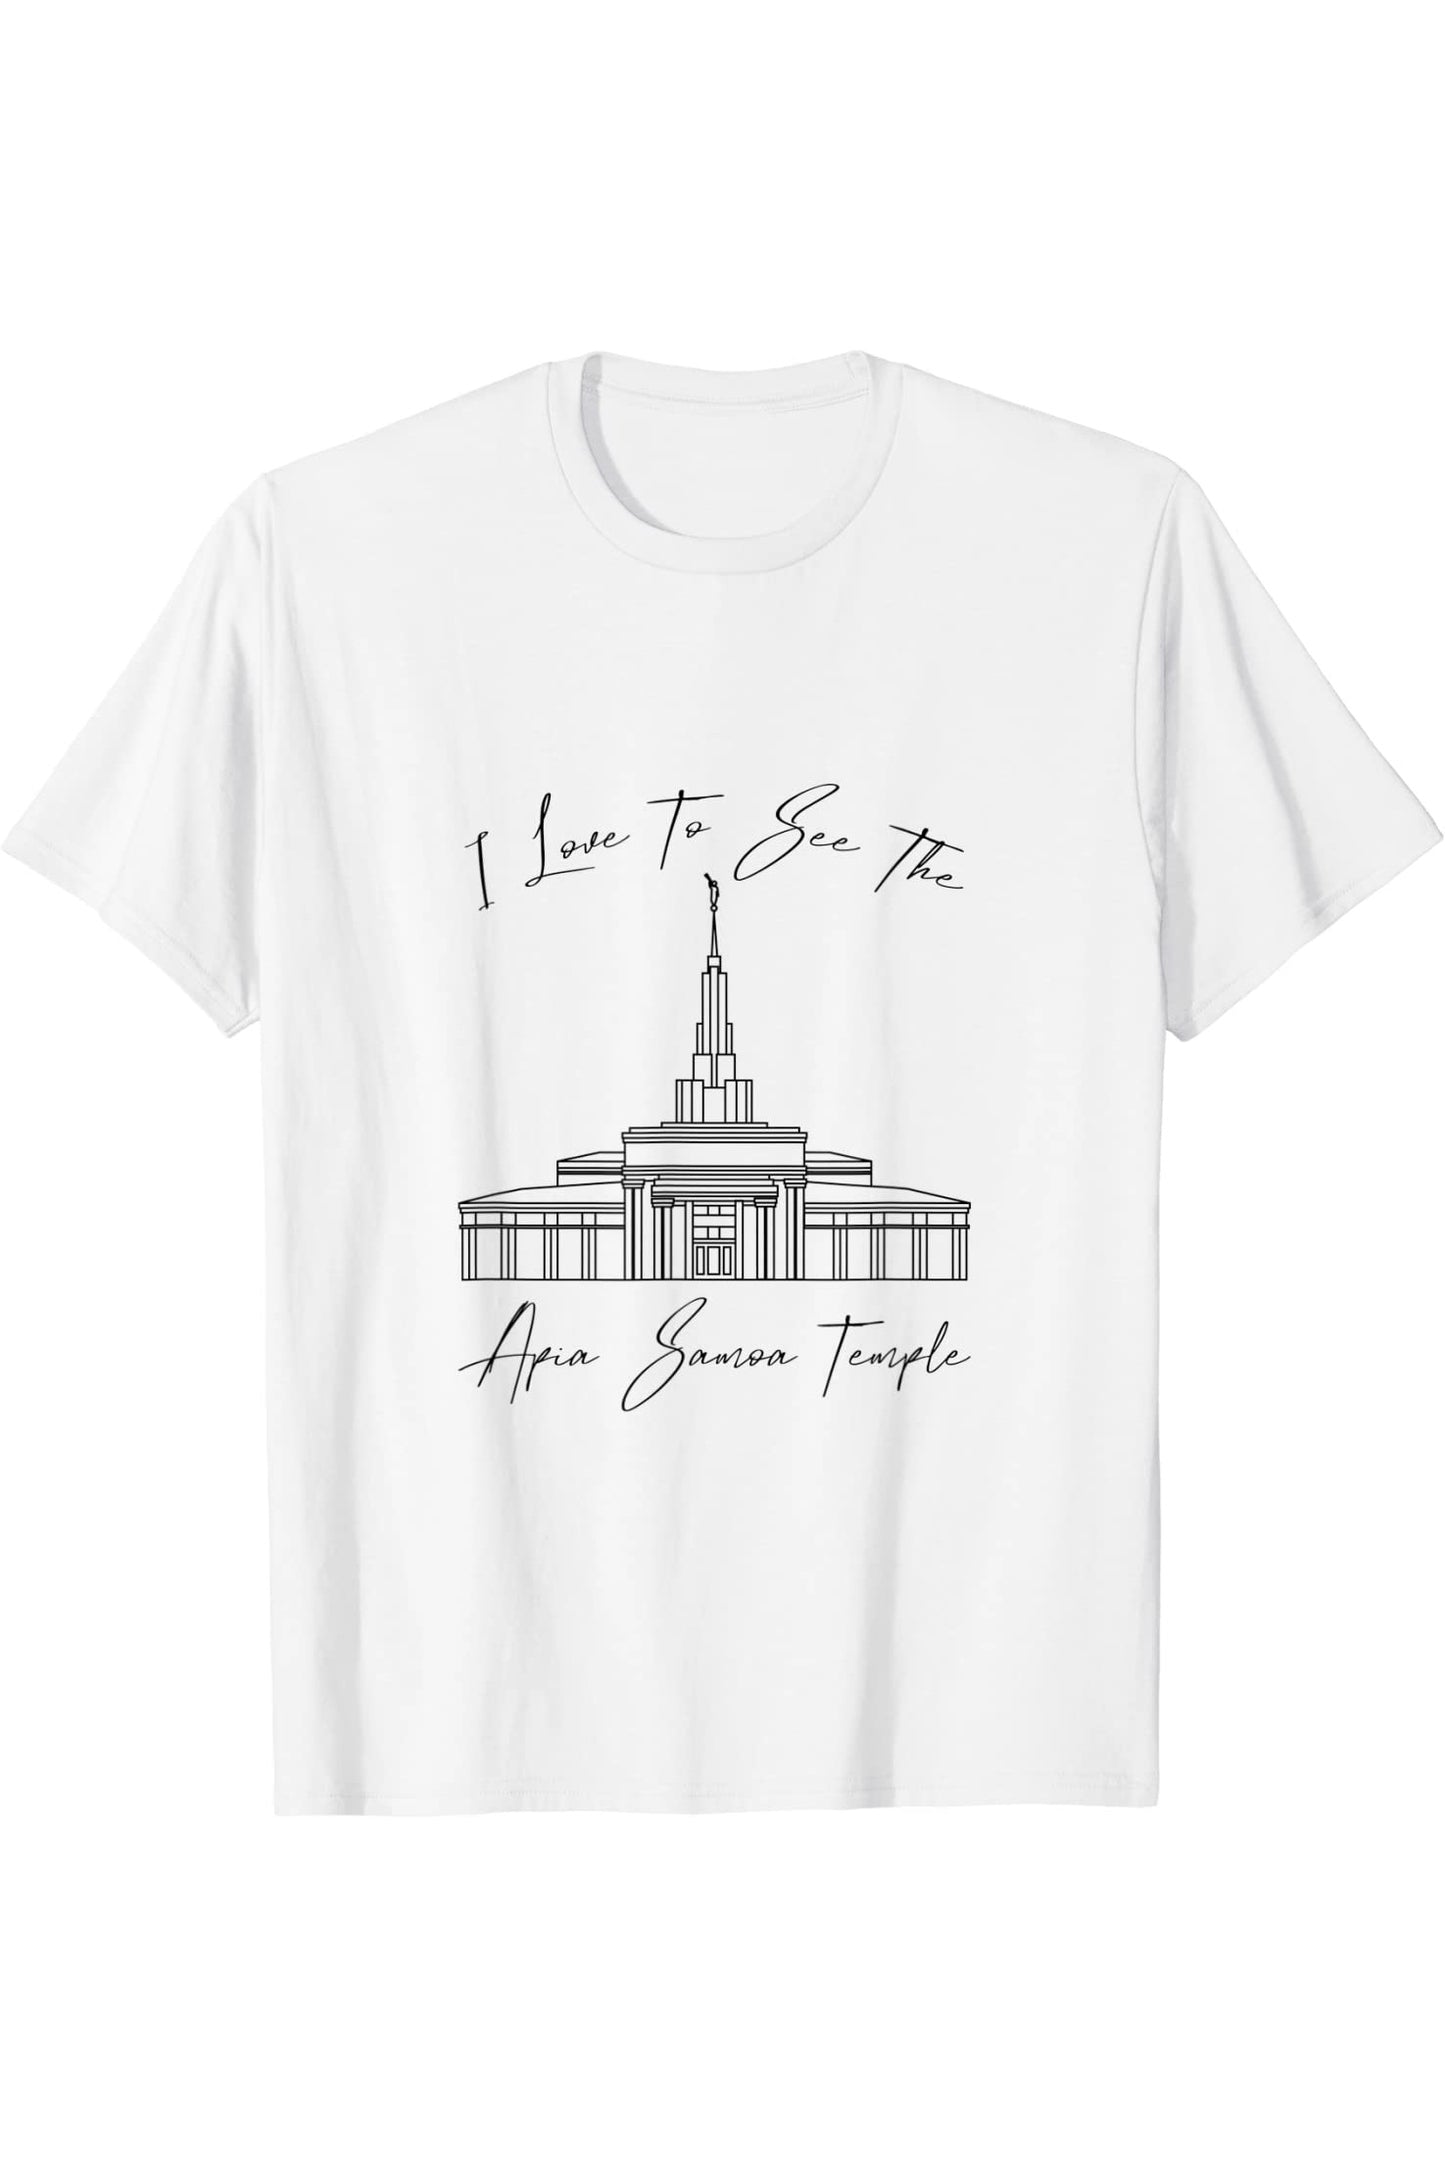 Apia Samoa Temple T-Shirt - Calligraphy Style (English) US